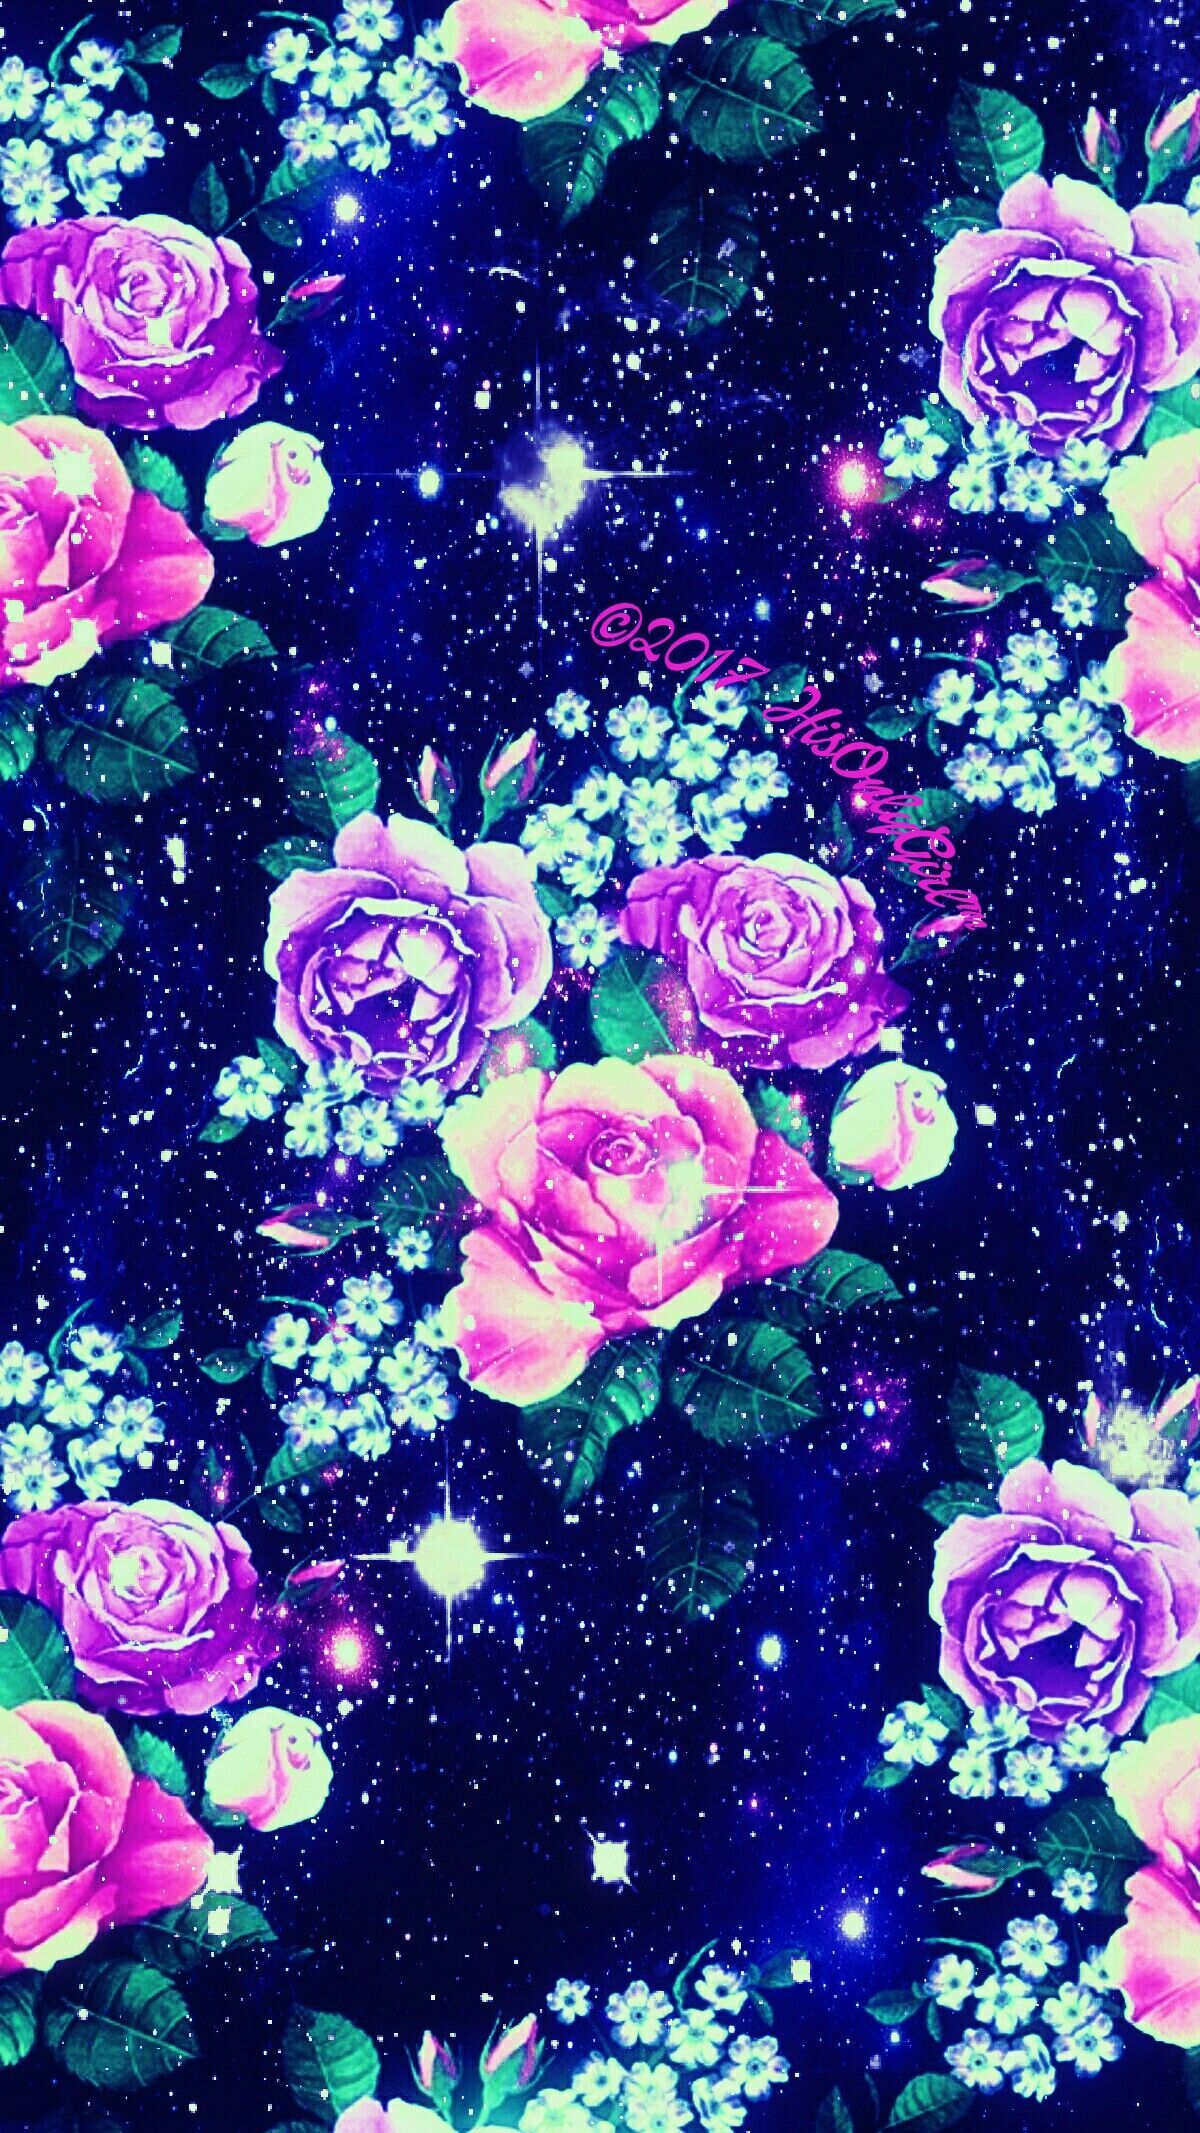 Cute Galaxy Wallpaper Free download 